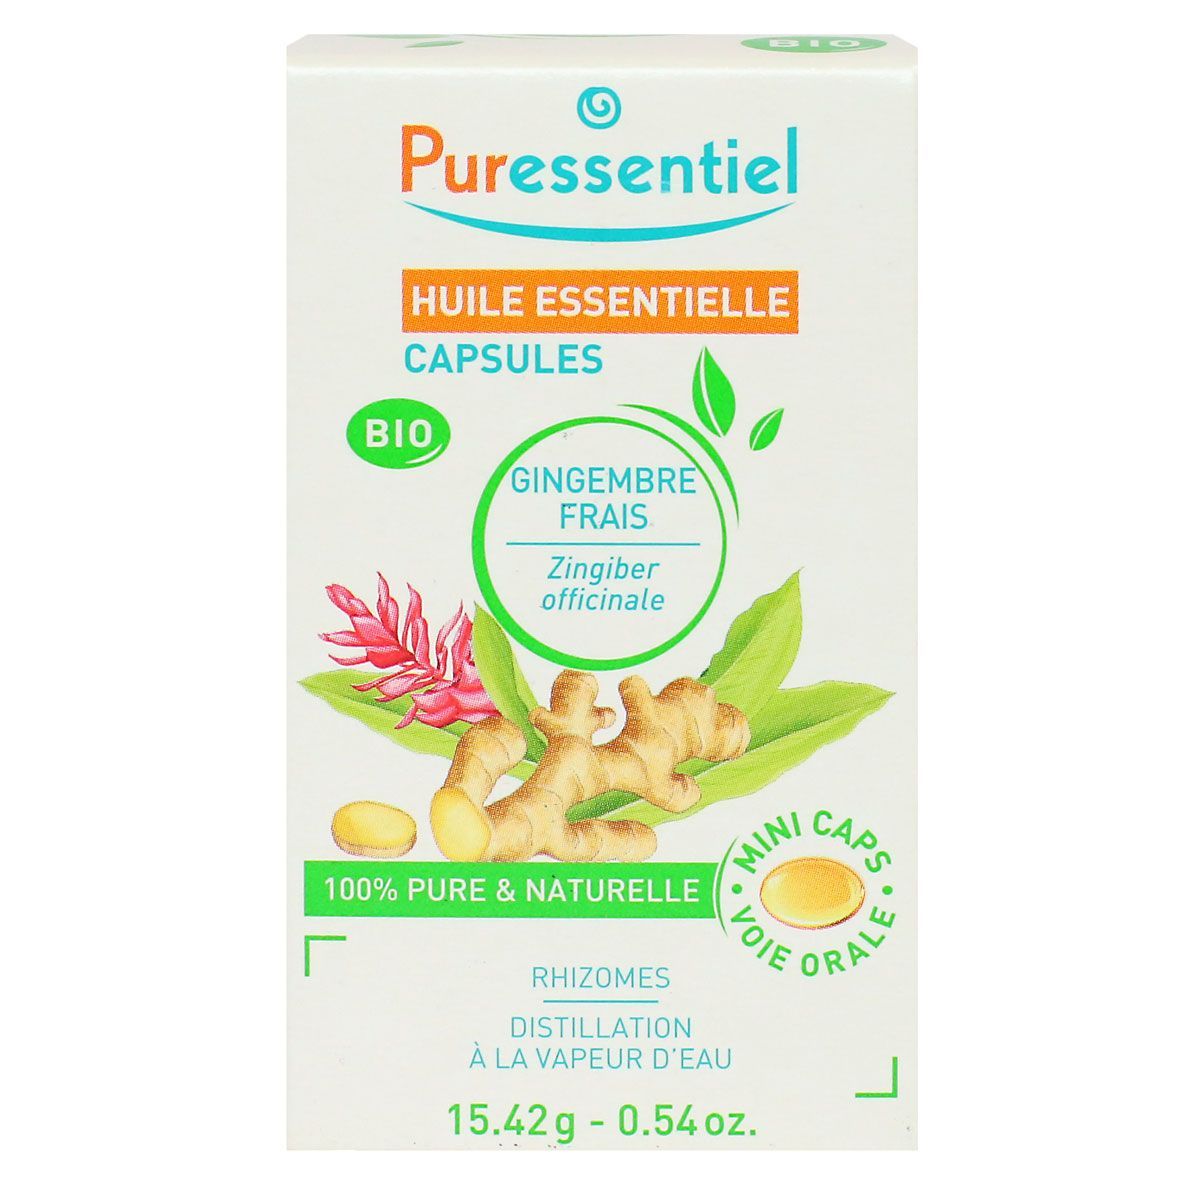 Huile essentielle bio gingembre frais Puressentiel, flacon de 5 ml